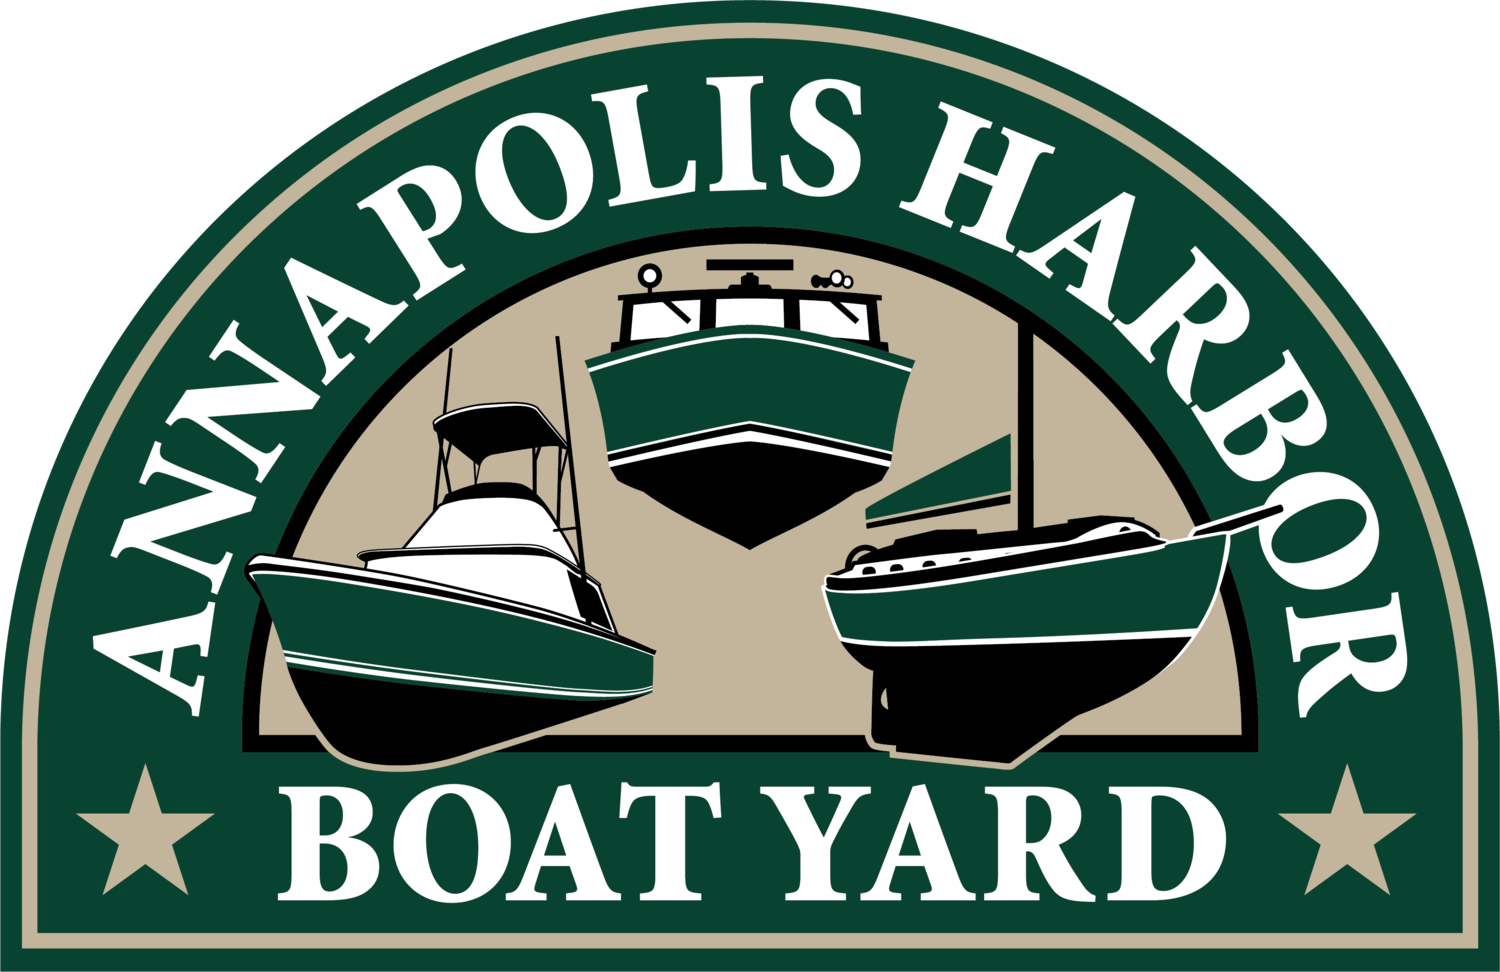 Annapolis Harbor Boat Yard